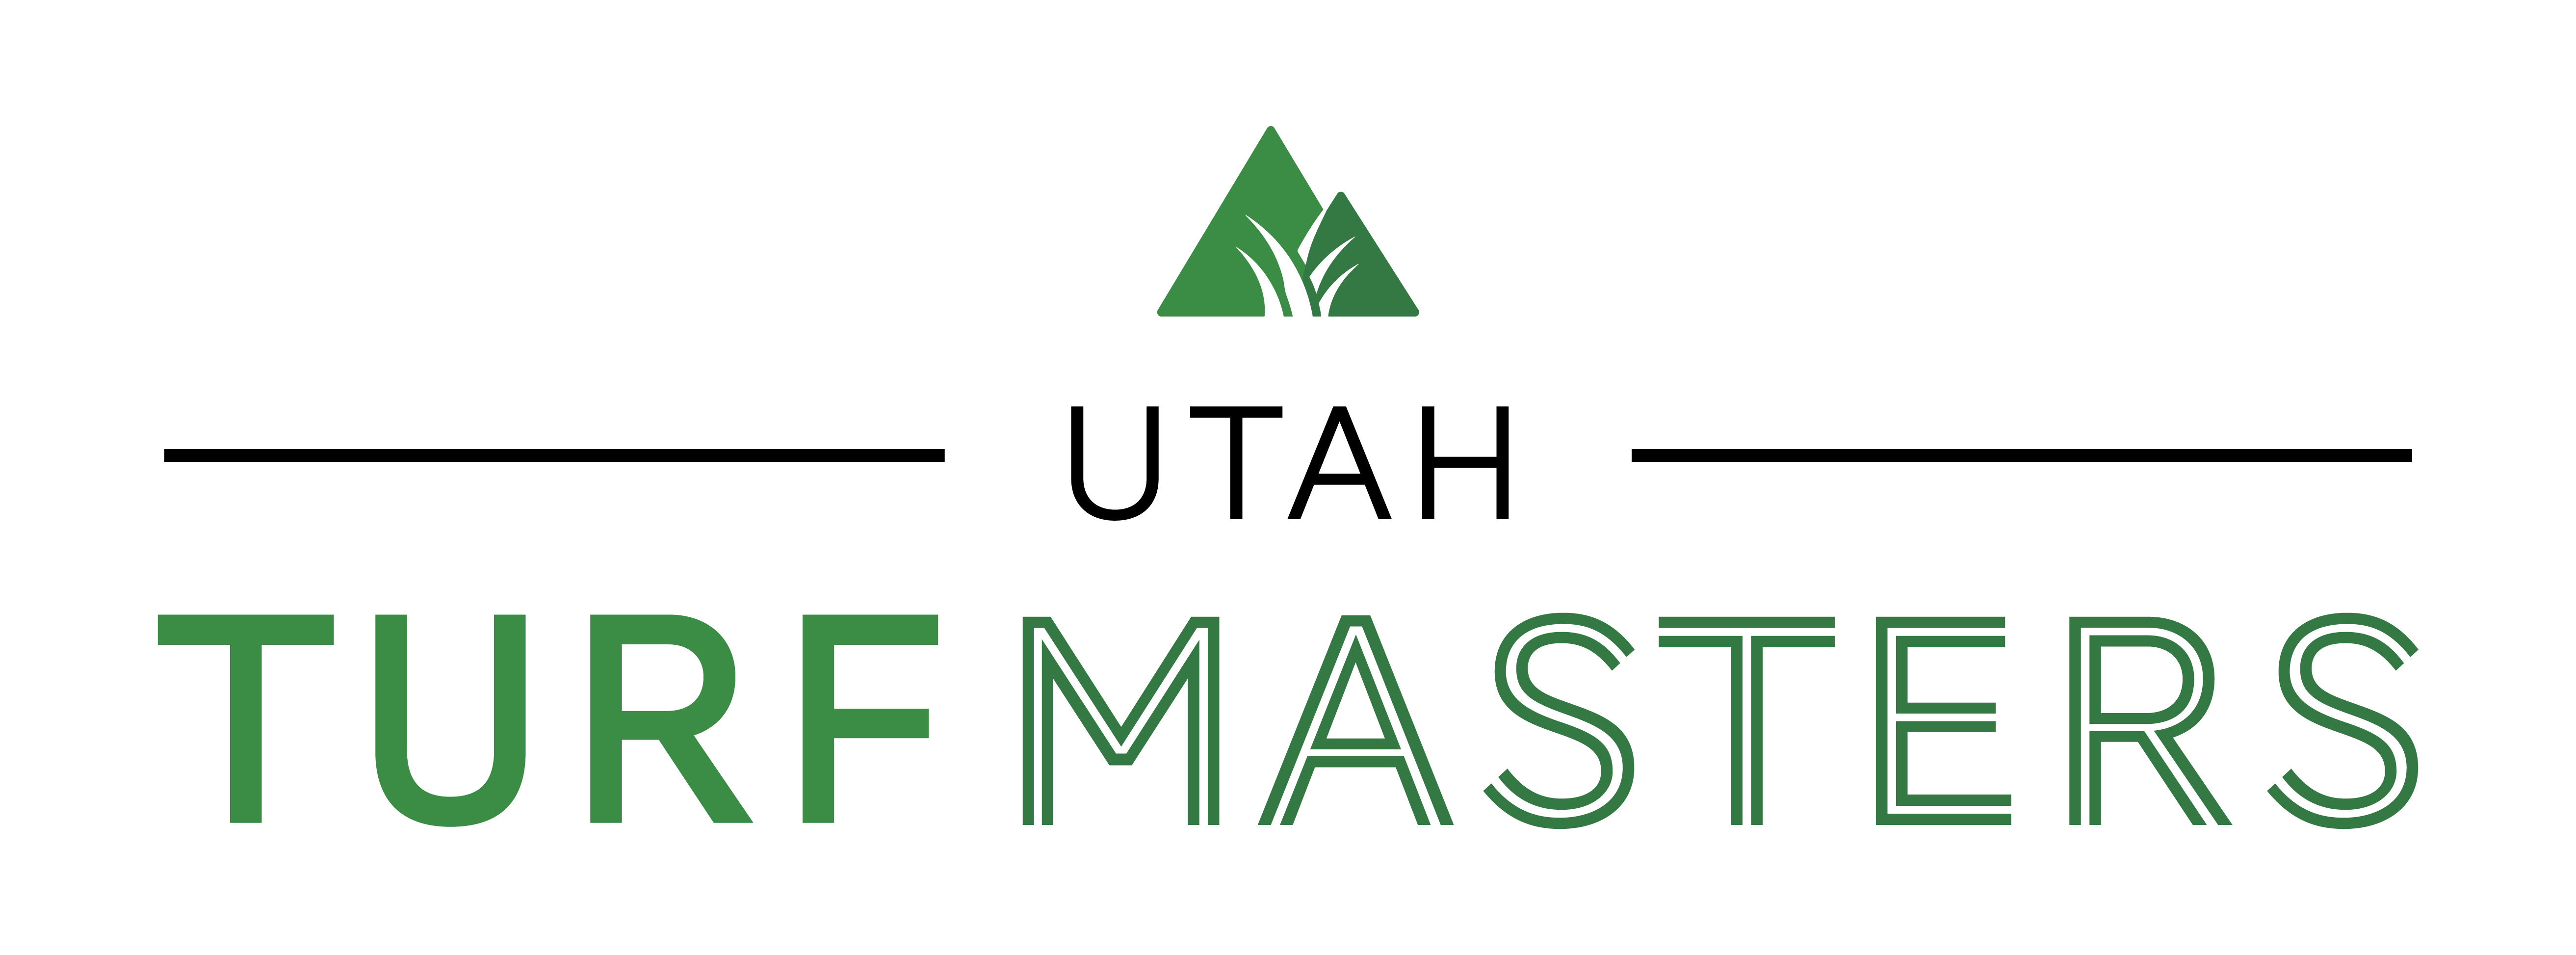 Utah turf masters artificial turf installer logo